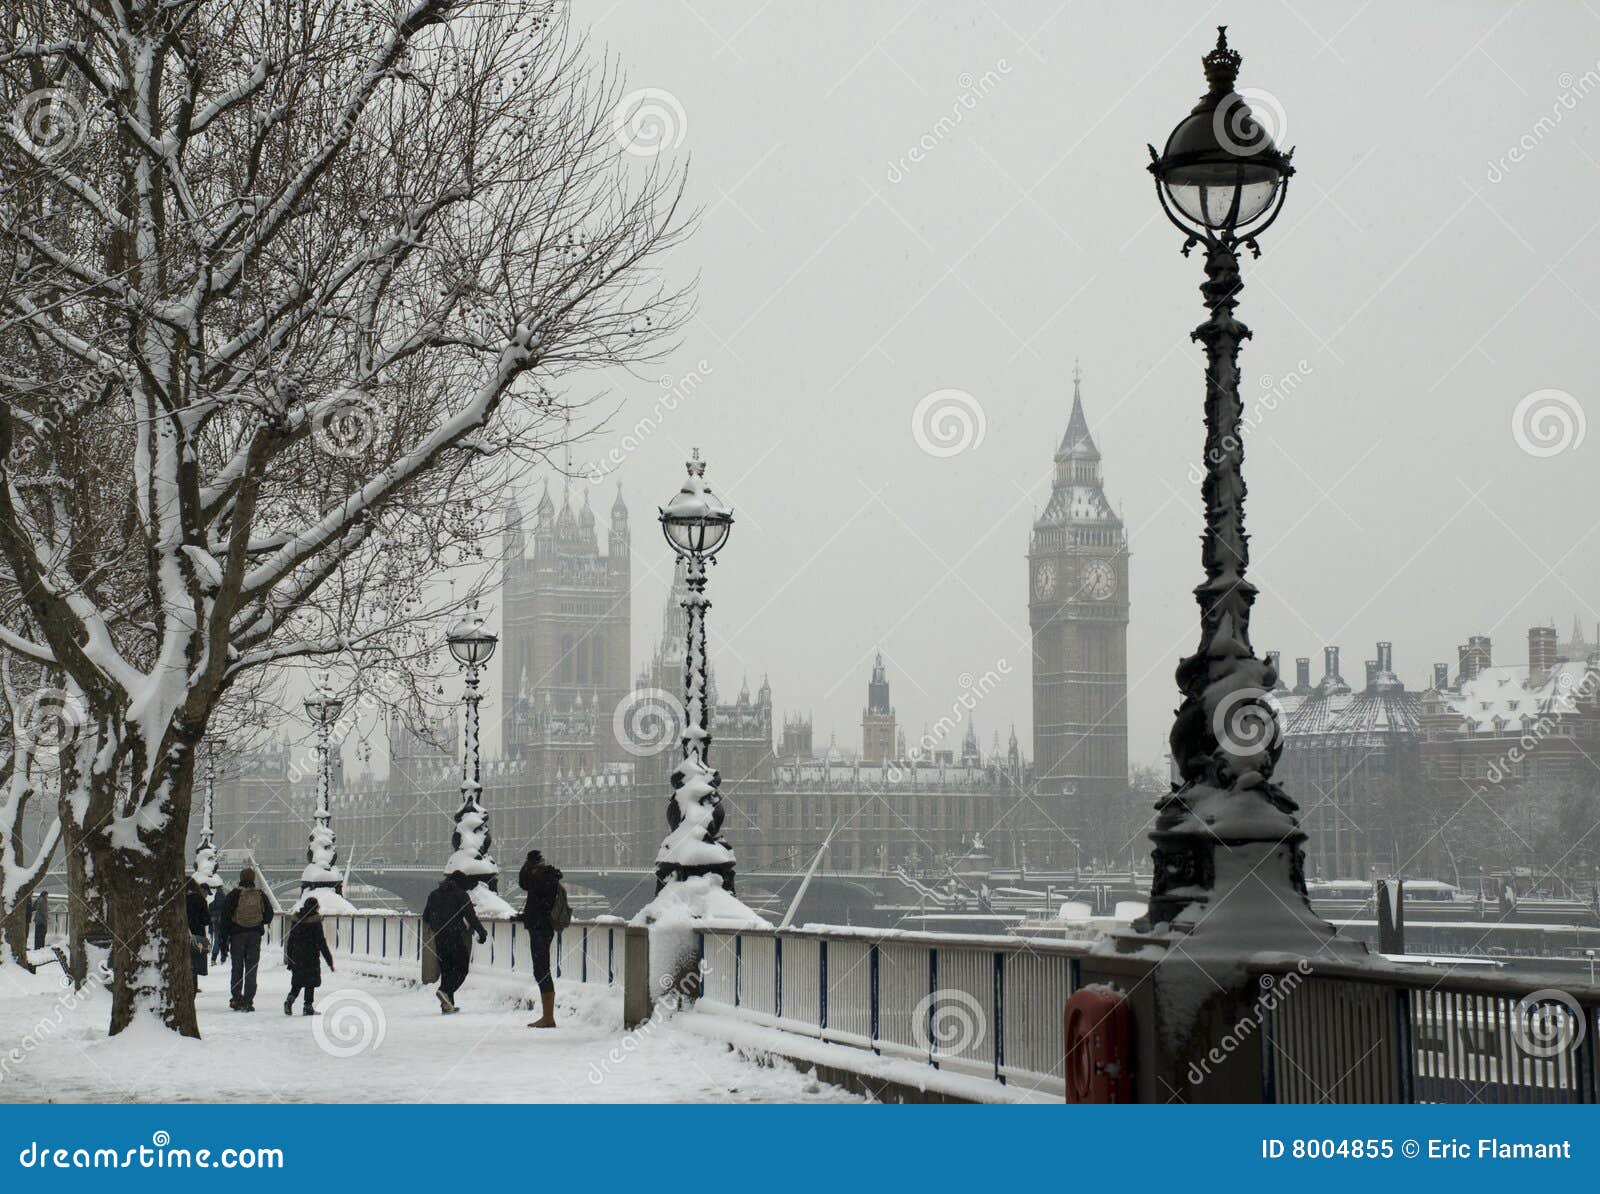 snow-london-8004855.jpg